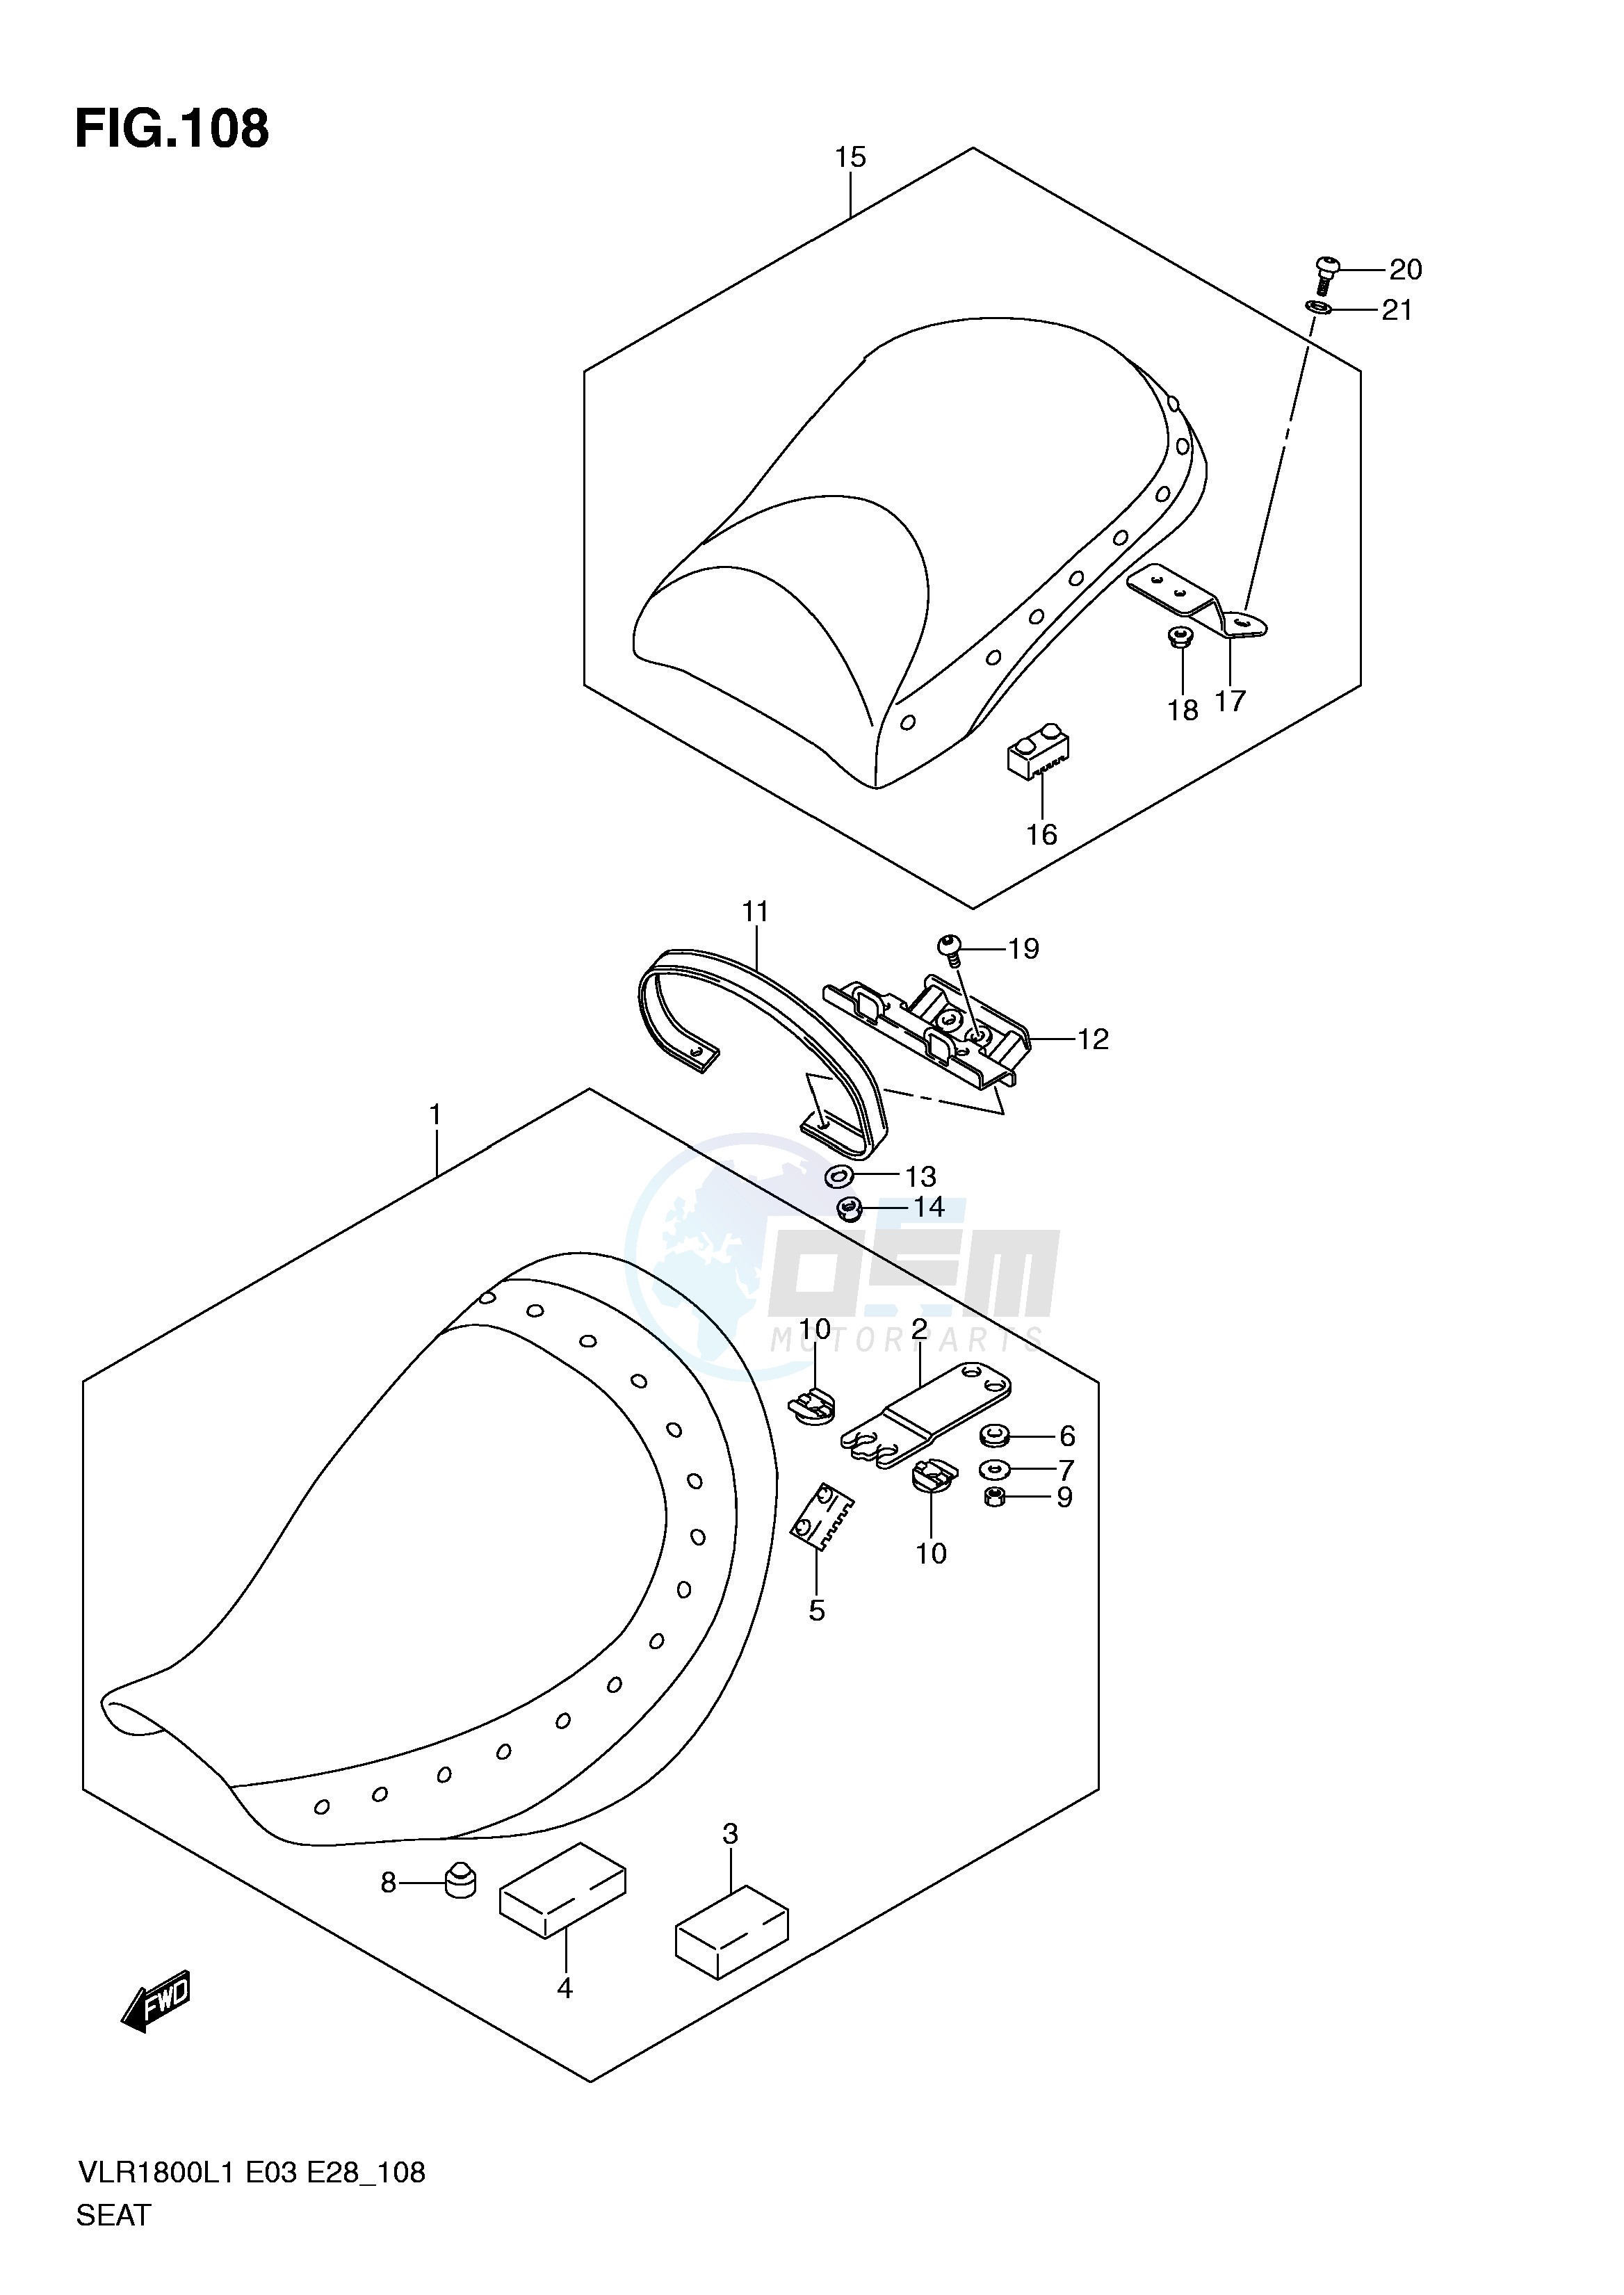 SEAT (VLR1800TL1 E3) blueprint